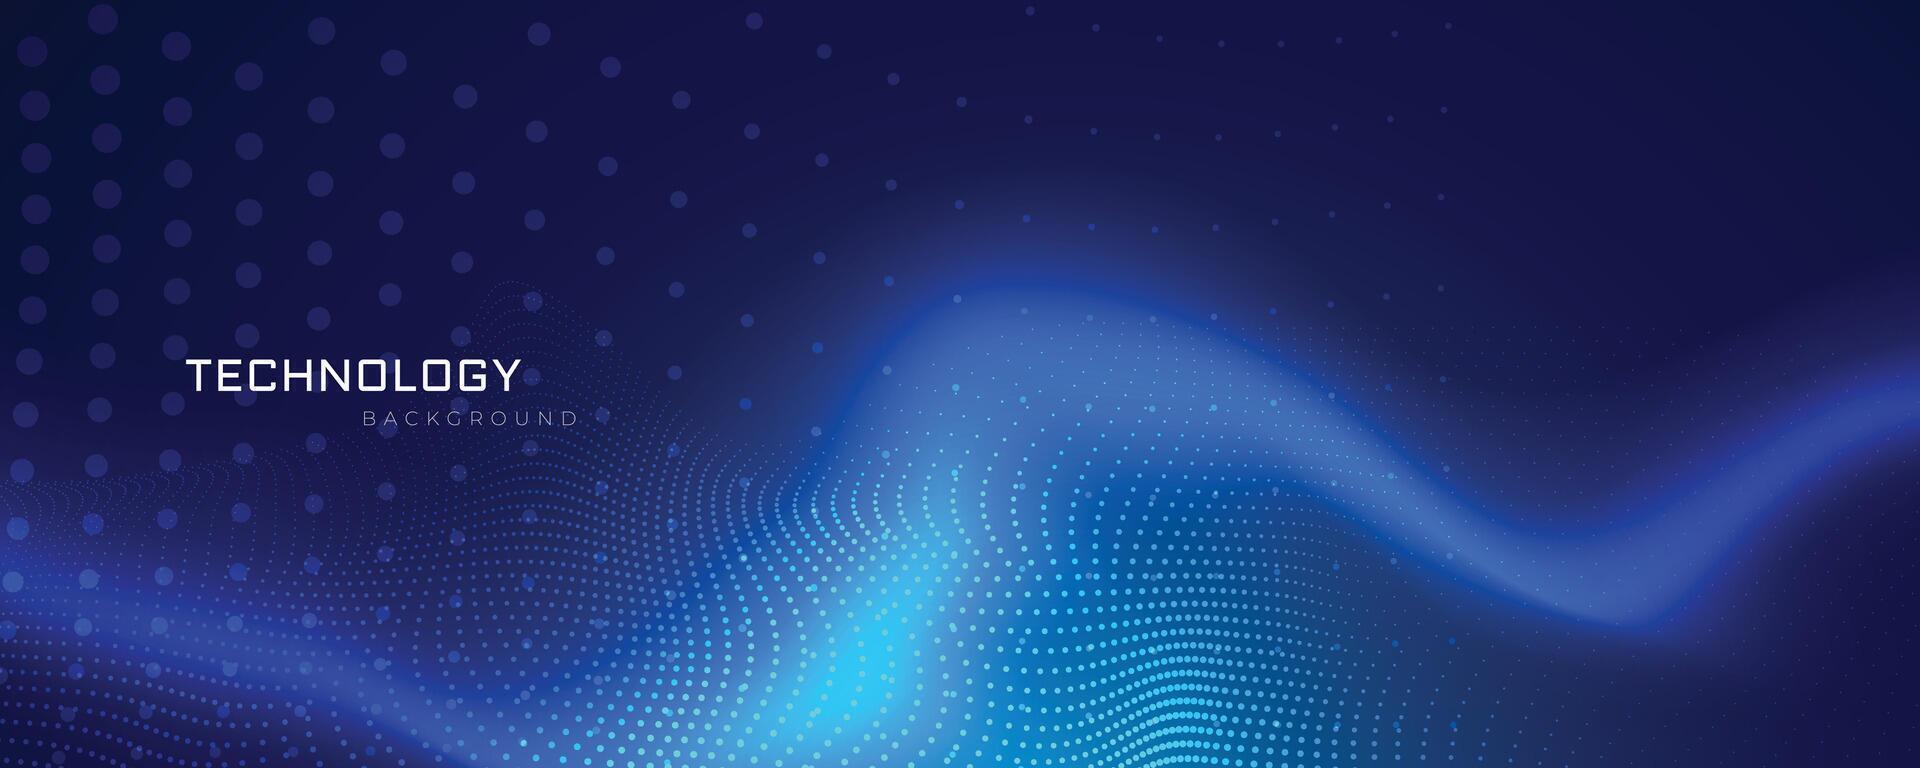 abstract blue technology banner design vector